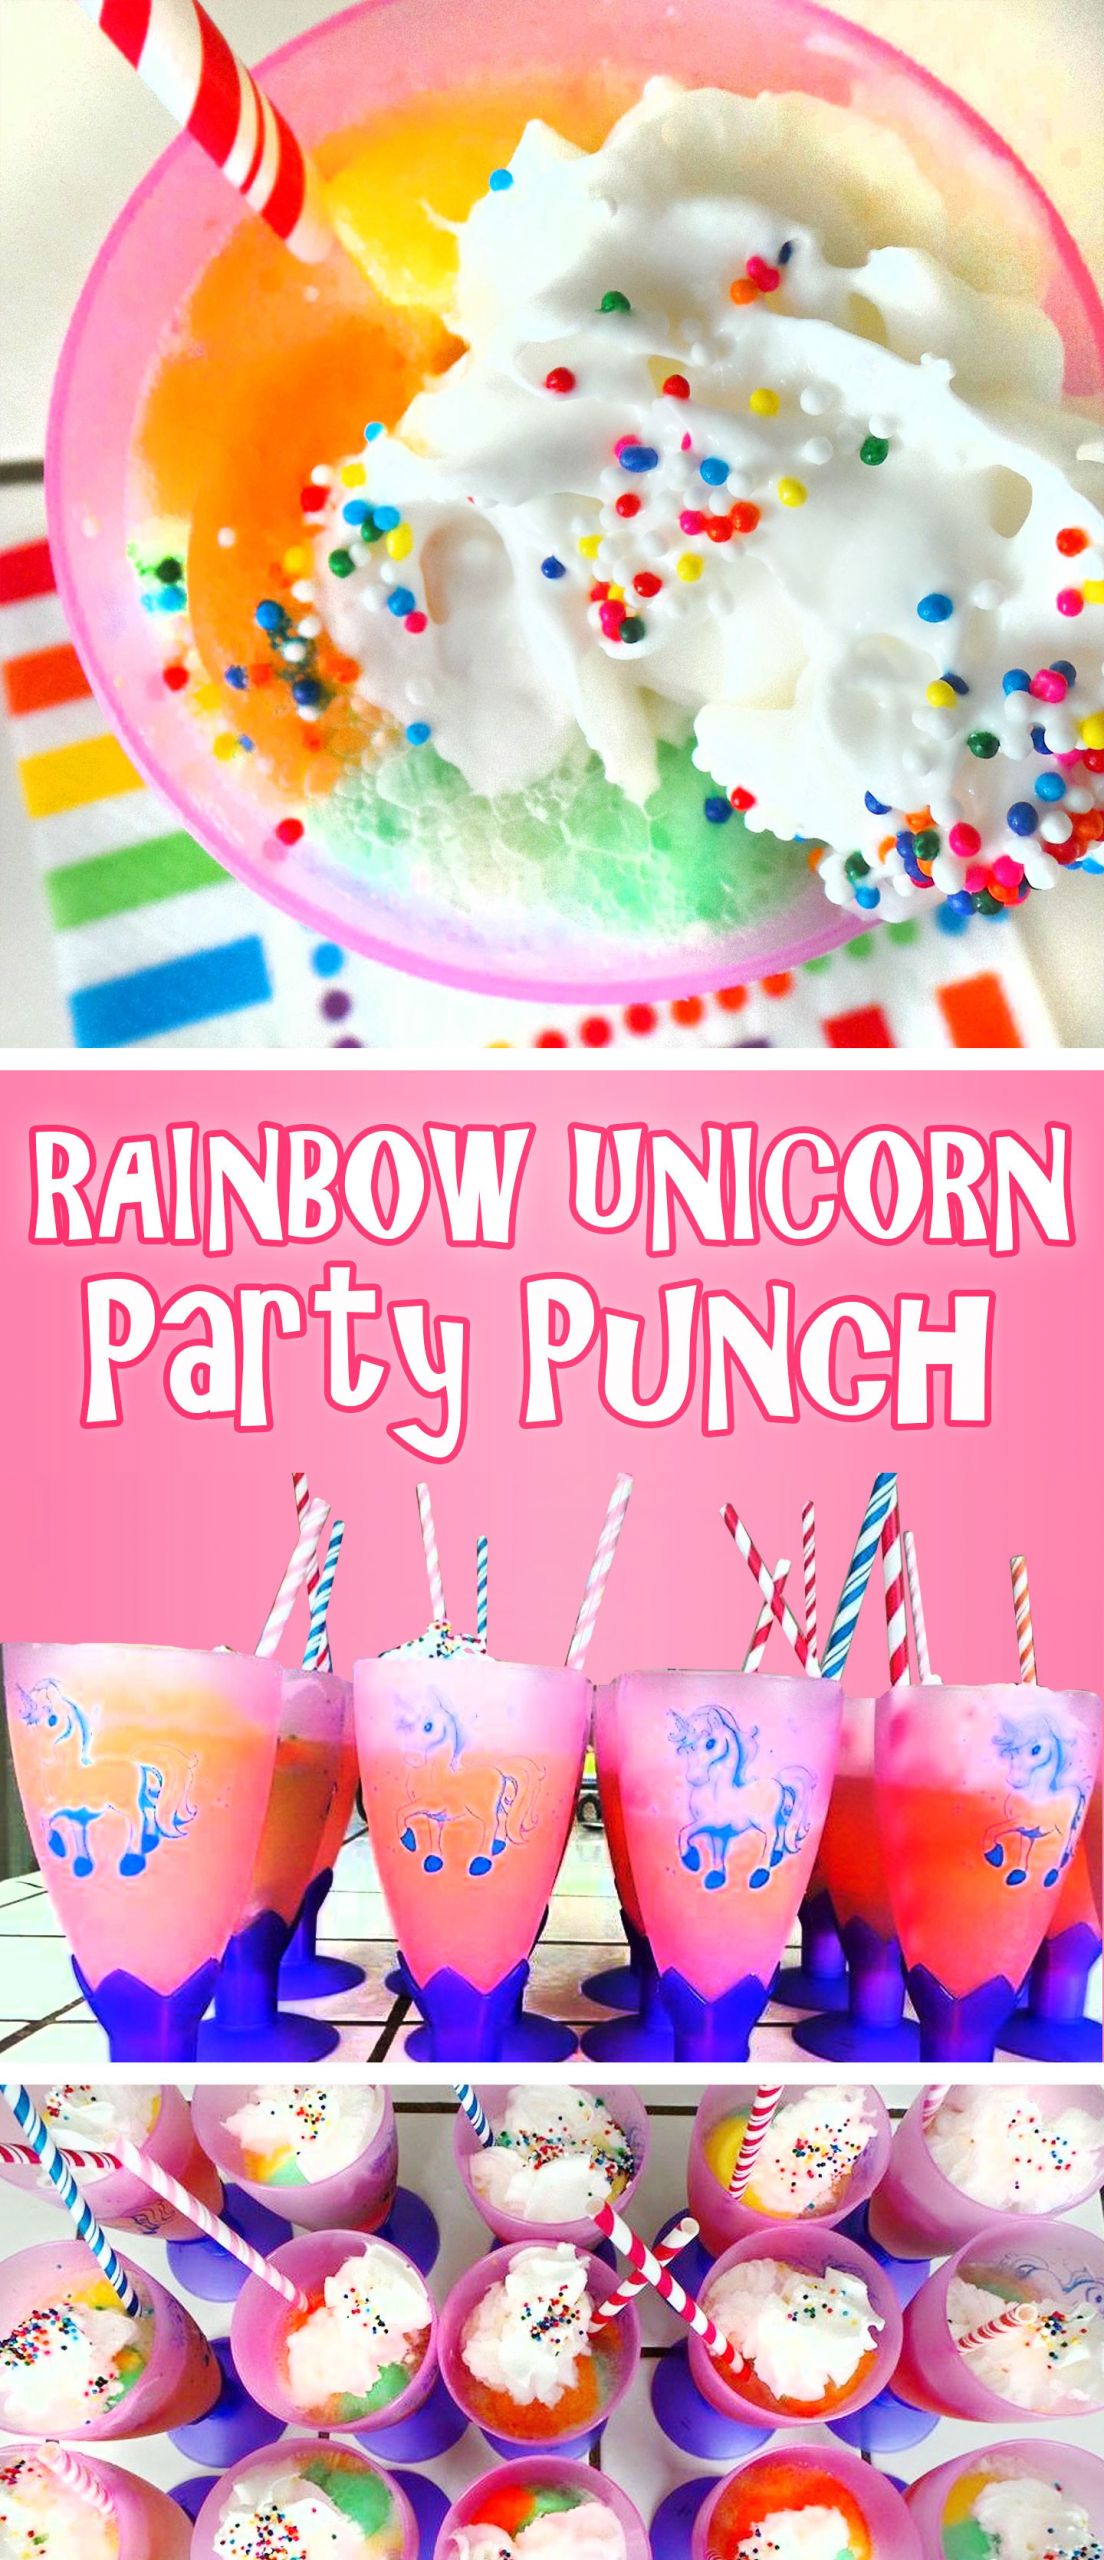 Unicorn And Rainbow Birthday Party Ideas
 Rainbow Unicorn Party Punch